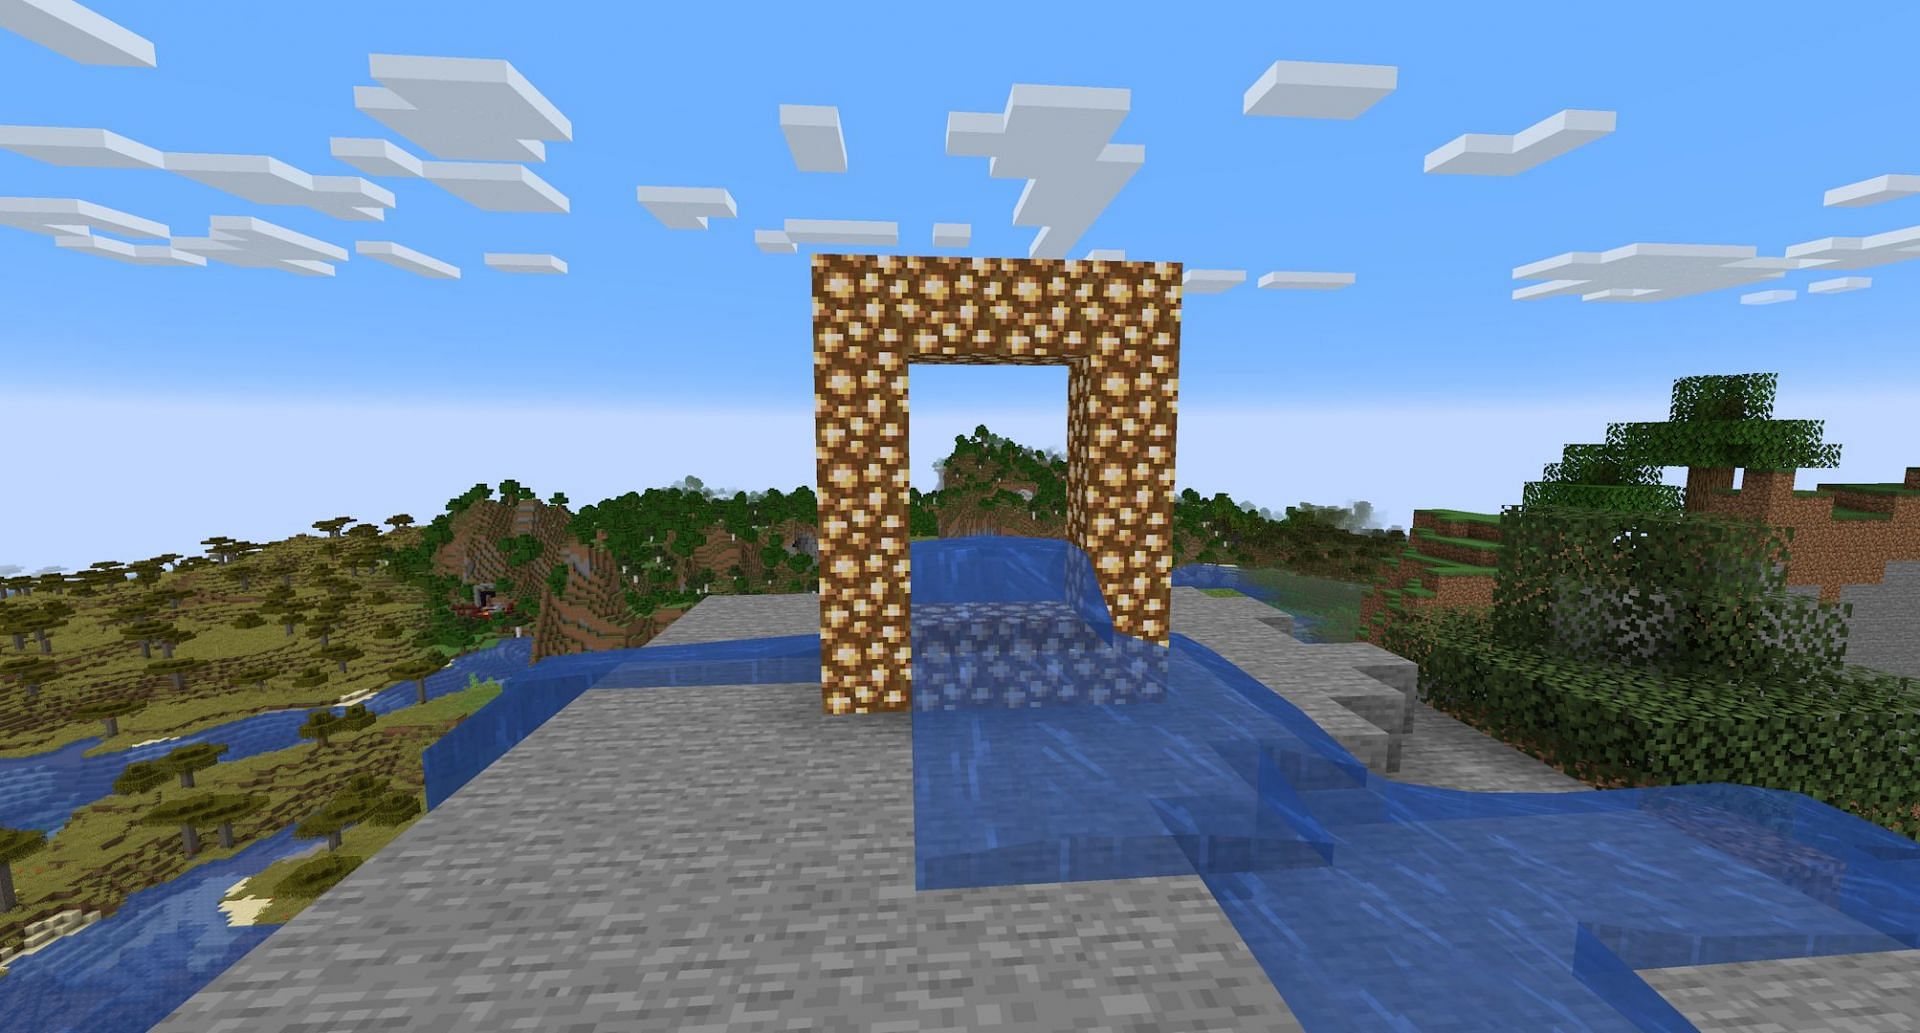 A failed aether portal, a sad sight for any Minecraft veteran (Image via Mojang)